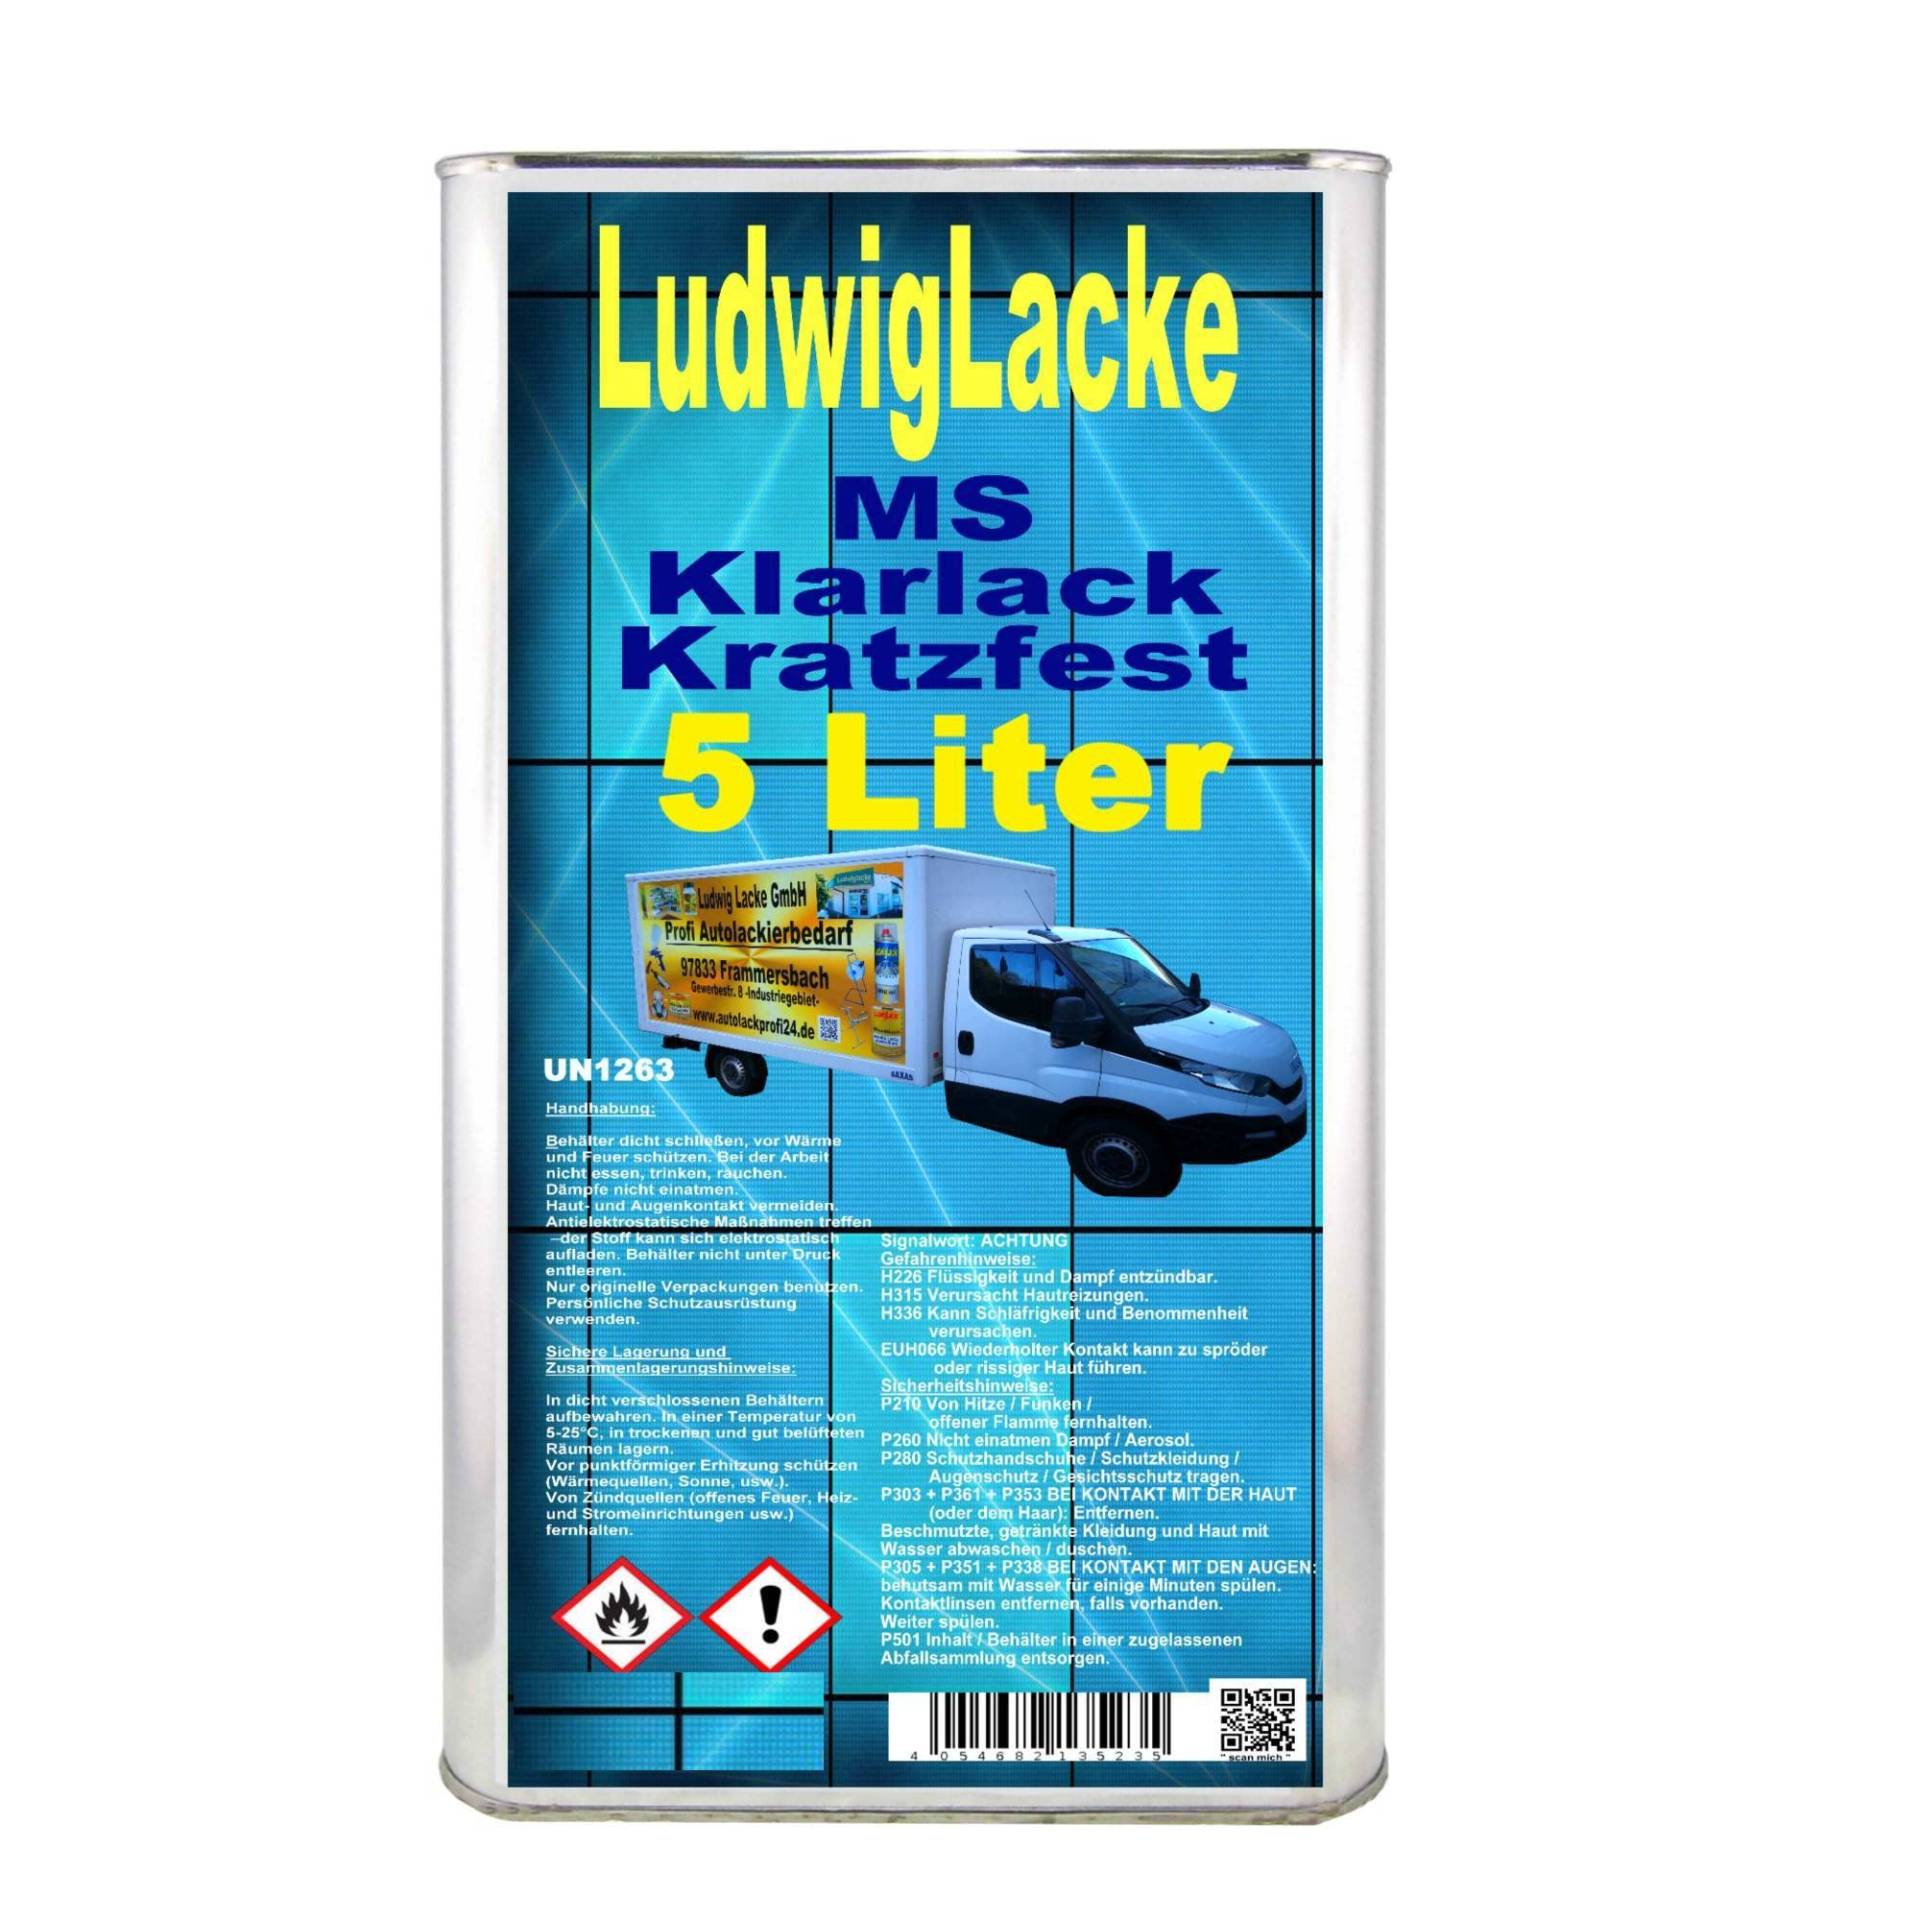 Ludwig Lacke Klarlack 5 Liter MS Klarlack von Ludwiglacke